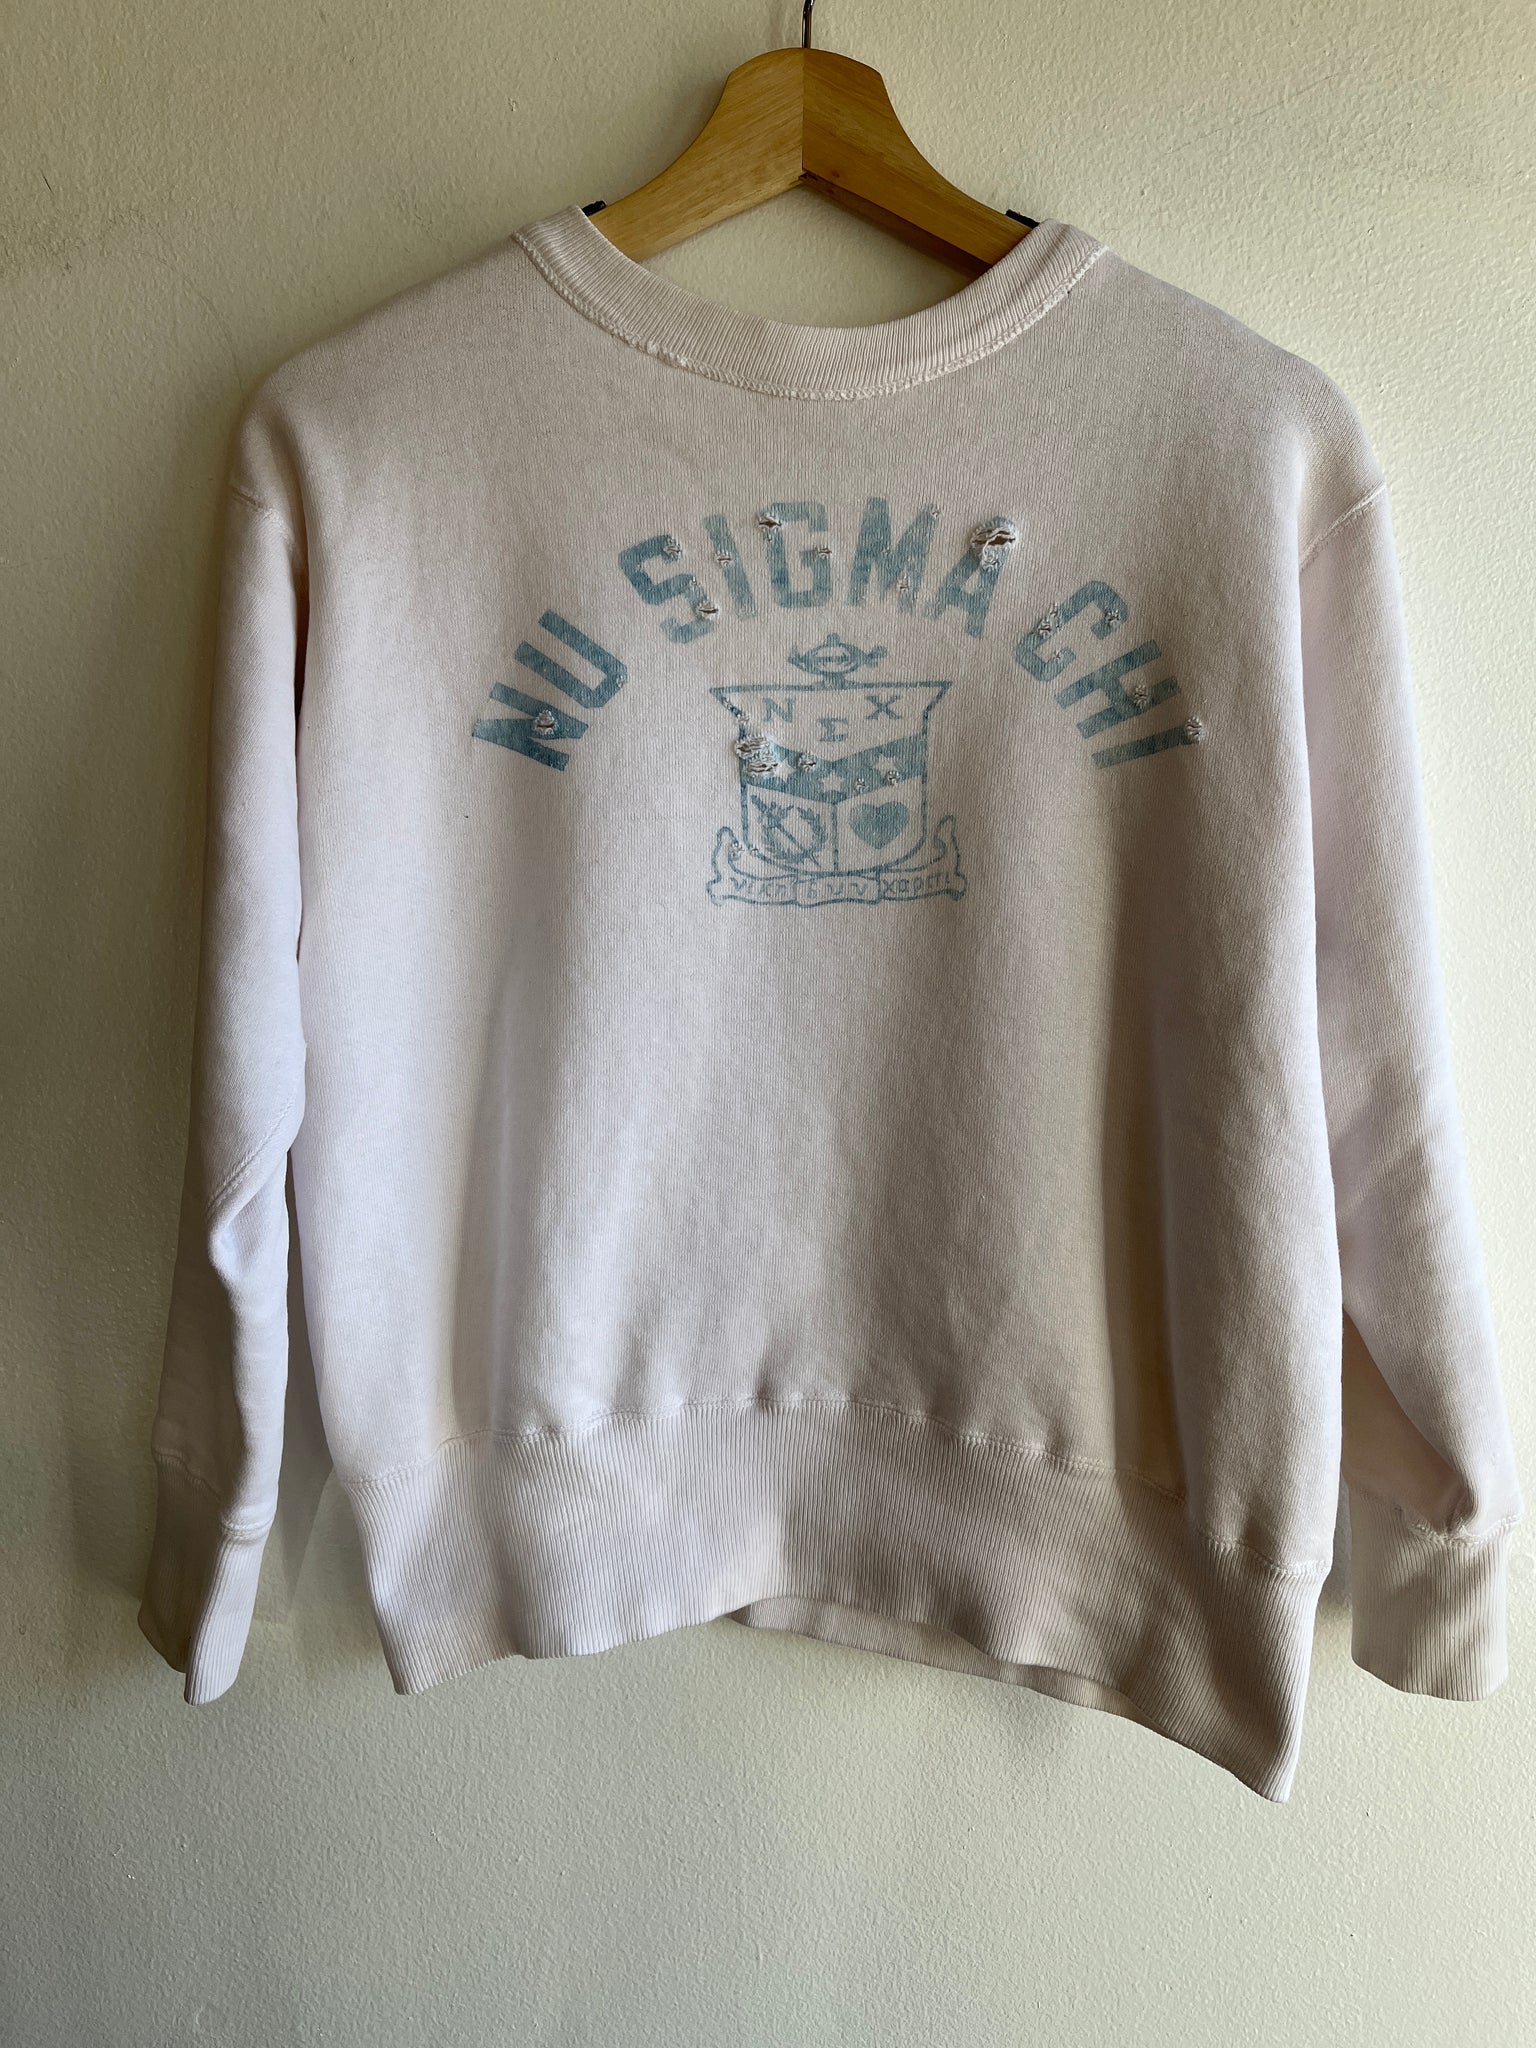 Vintage 1950’s Champion “Running Man” Nu Sigma Chi Sweatshirt